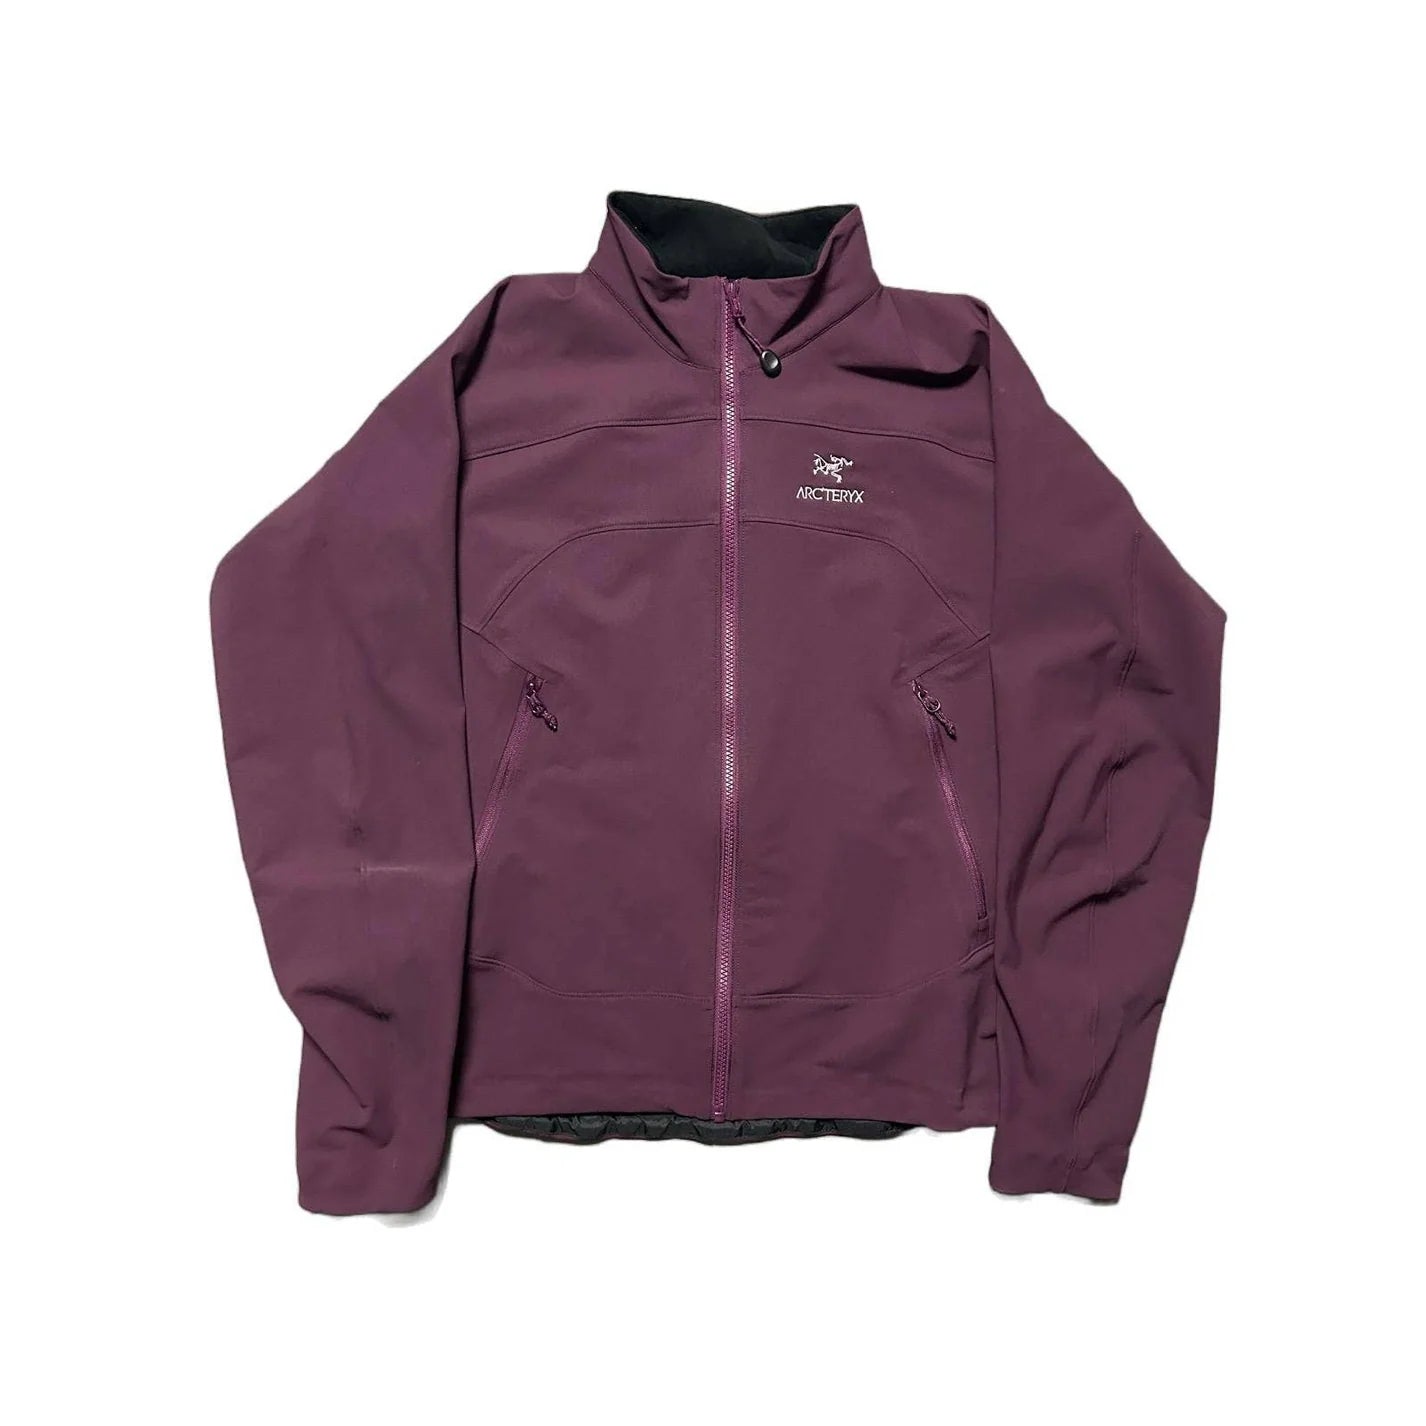 Arc’teryx Jacket Softshell Purple Vintage Lodz Polska Front